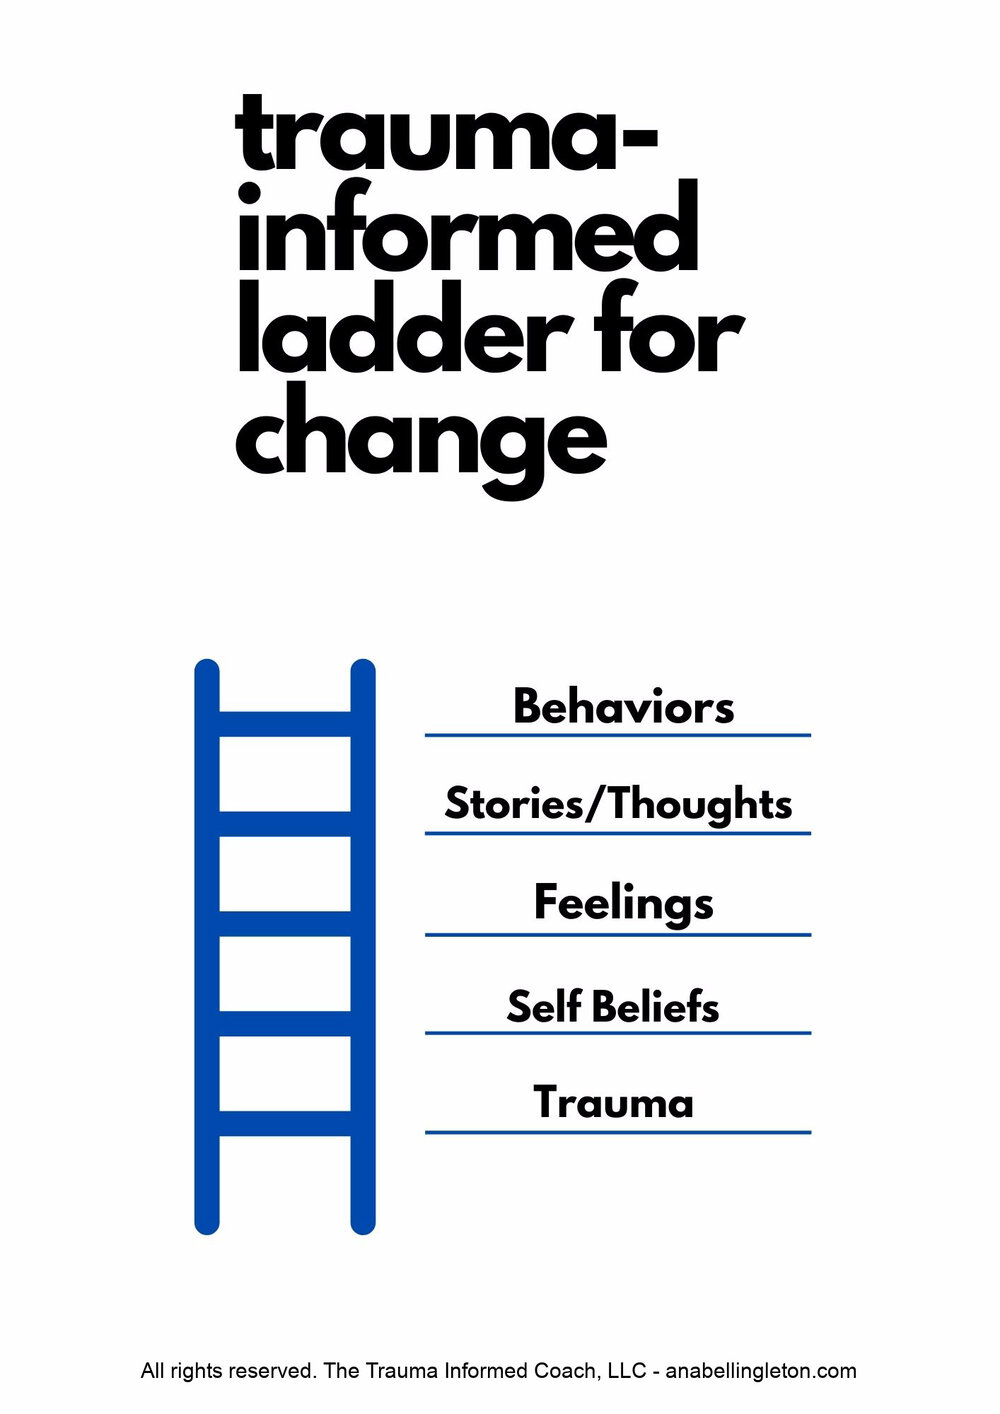 trauma informed ladder for change-2.jpg